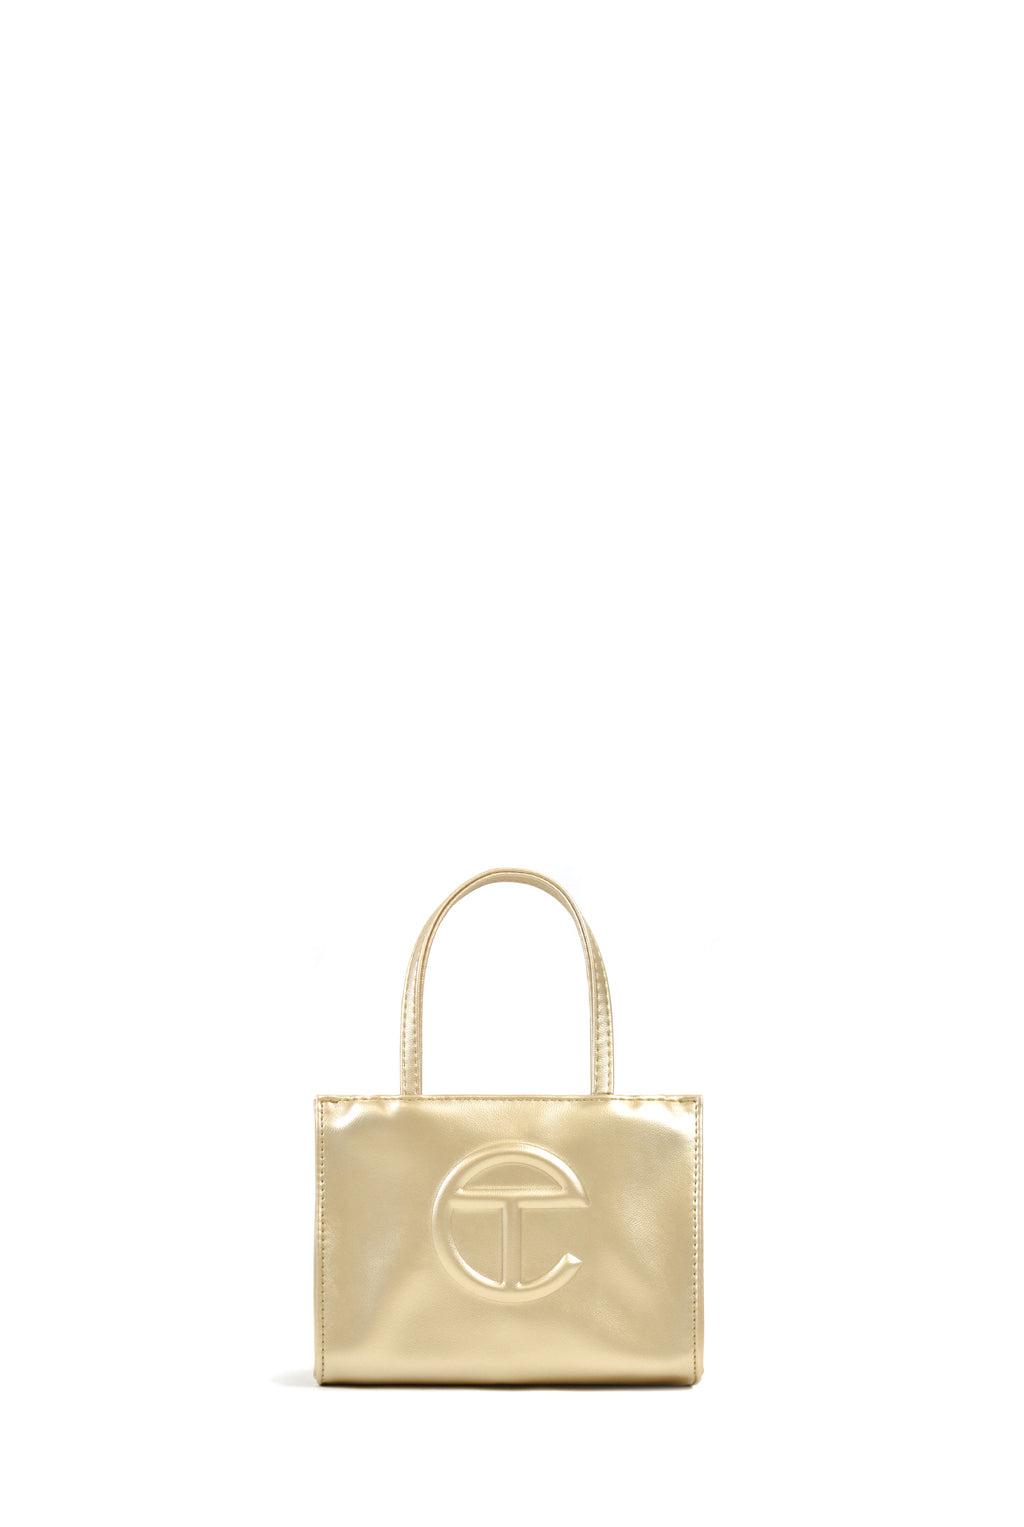 Telfar Small Shopping Bag, Gold